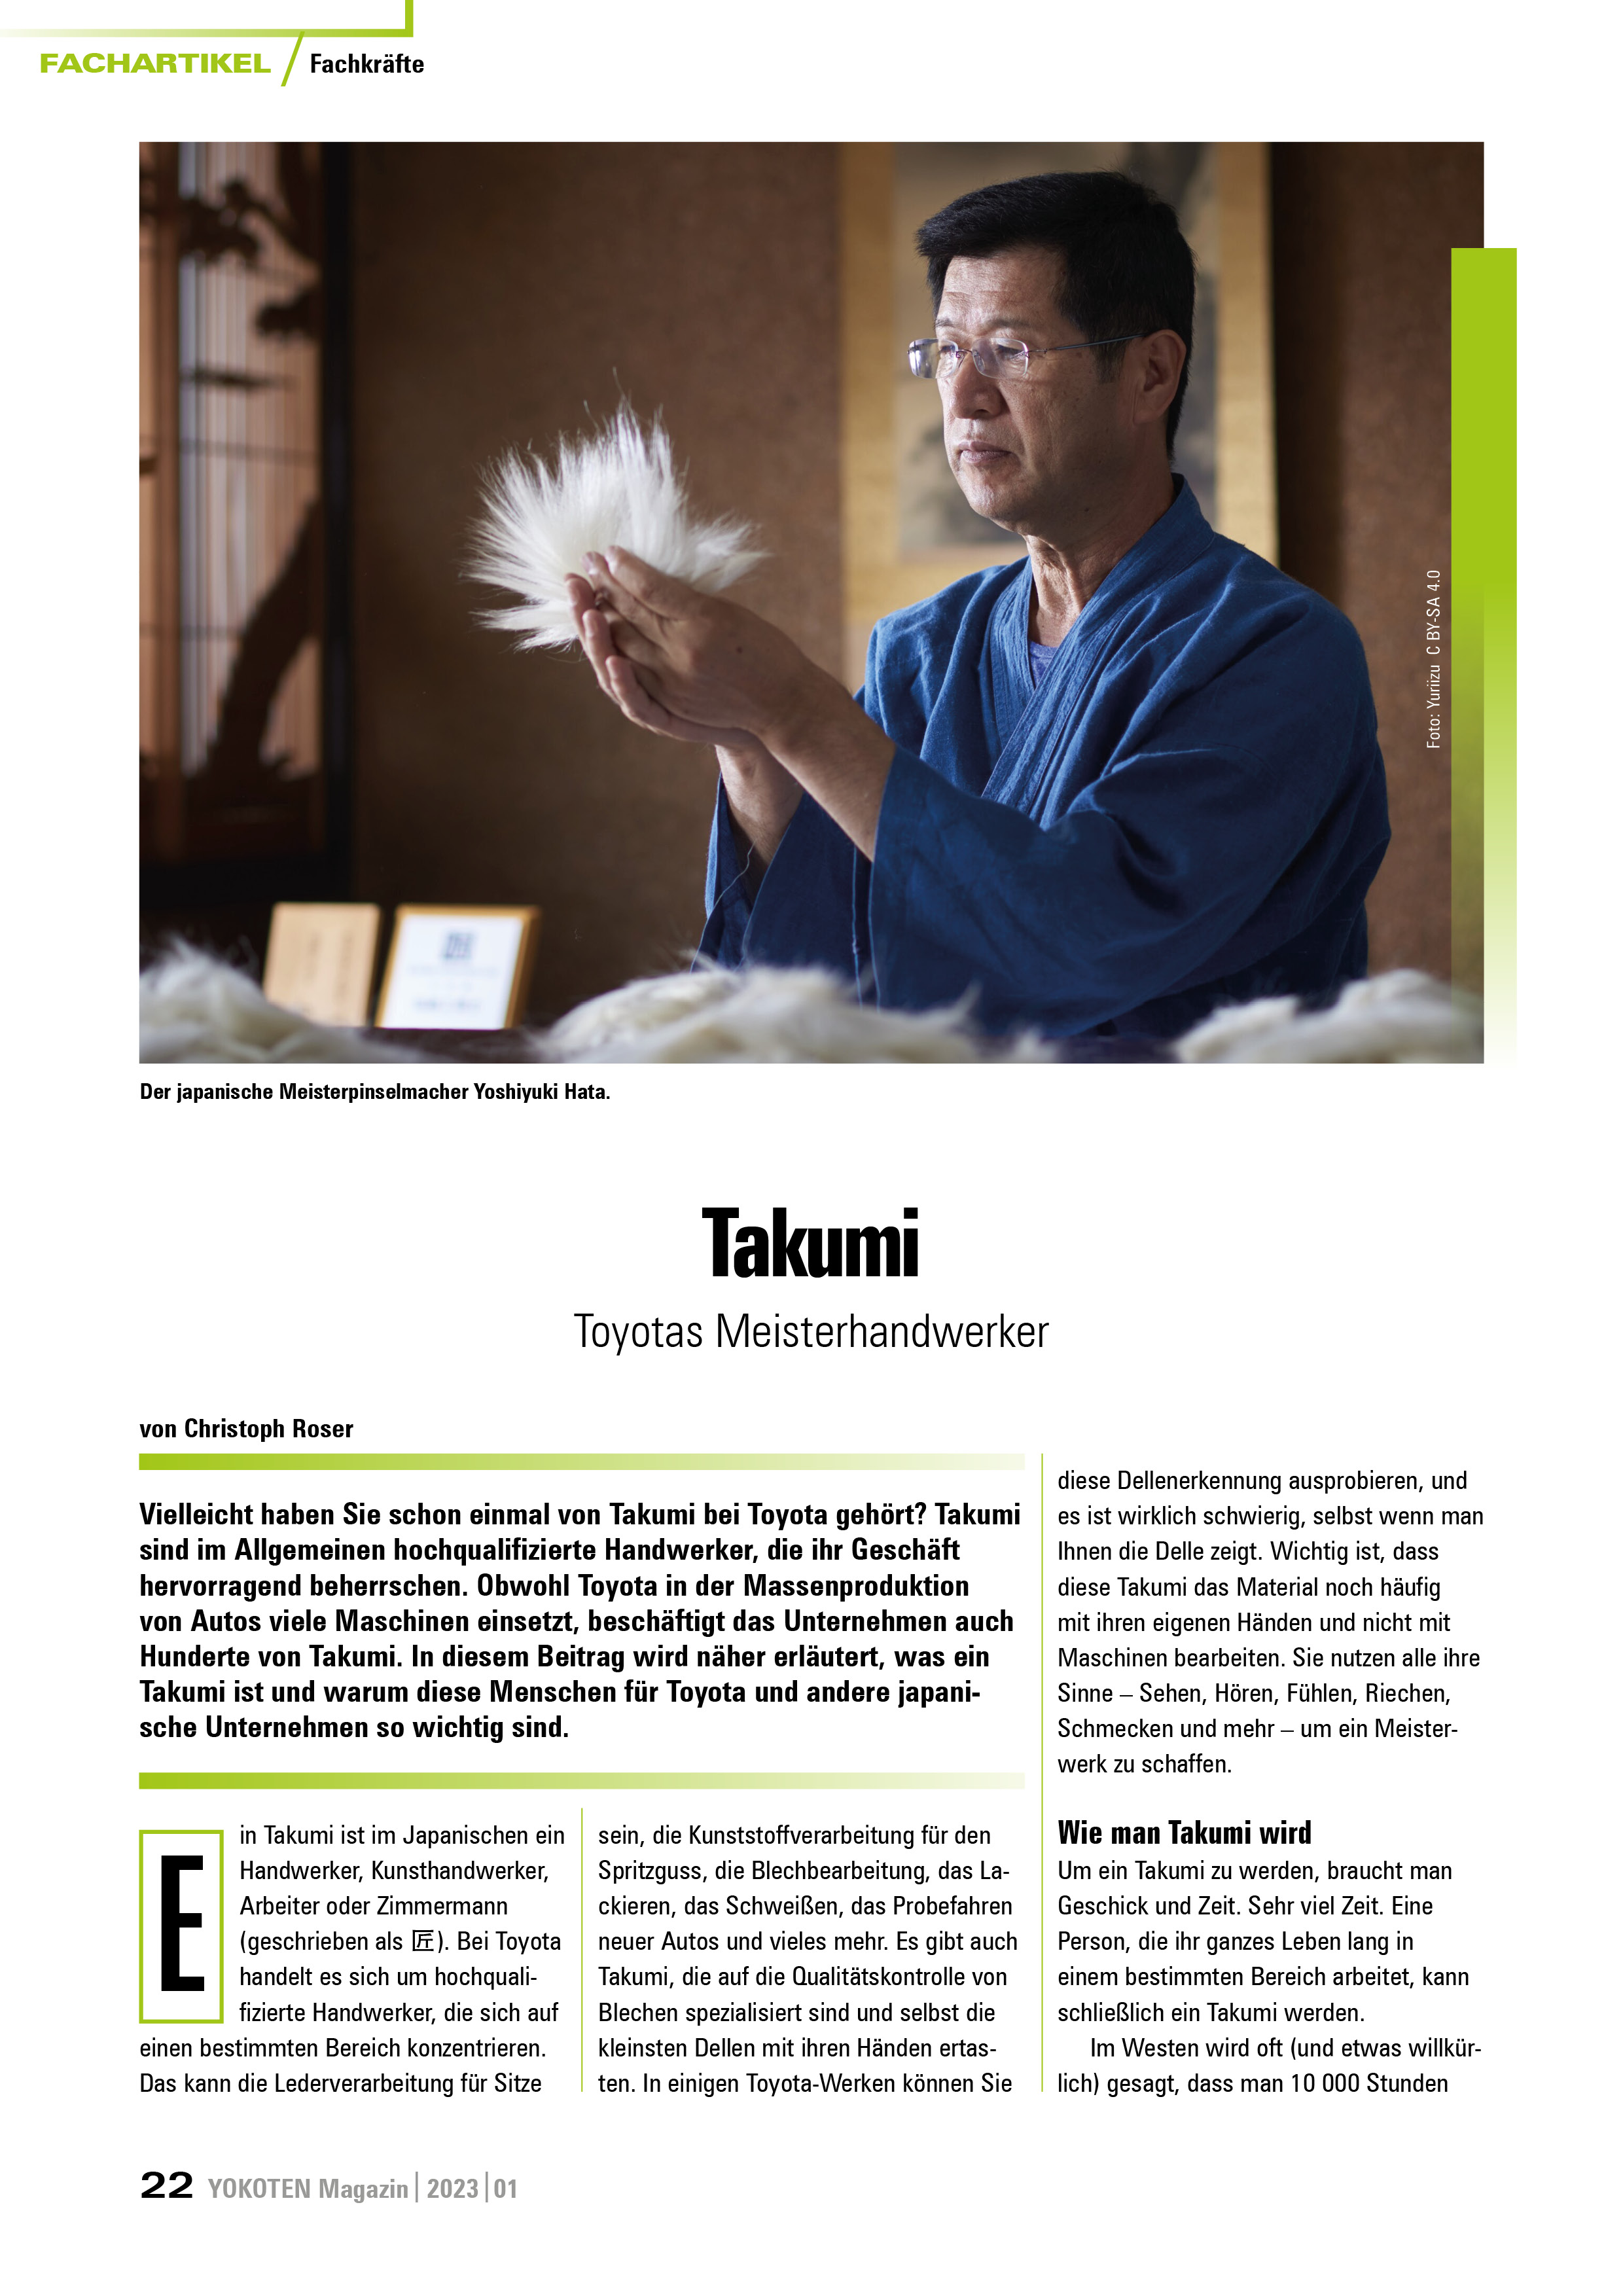 YOKOTEN-Artikel: Takumi - Toyotas Meisterhandwerker